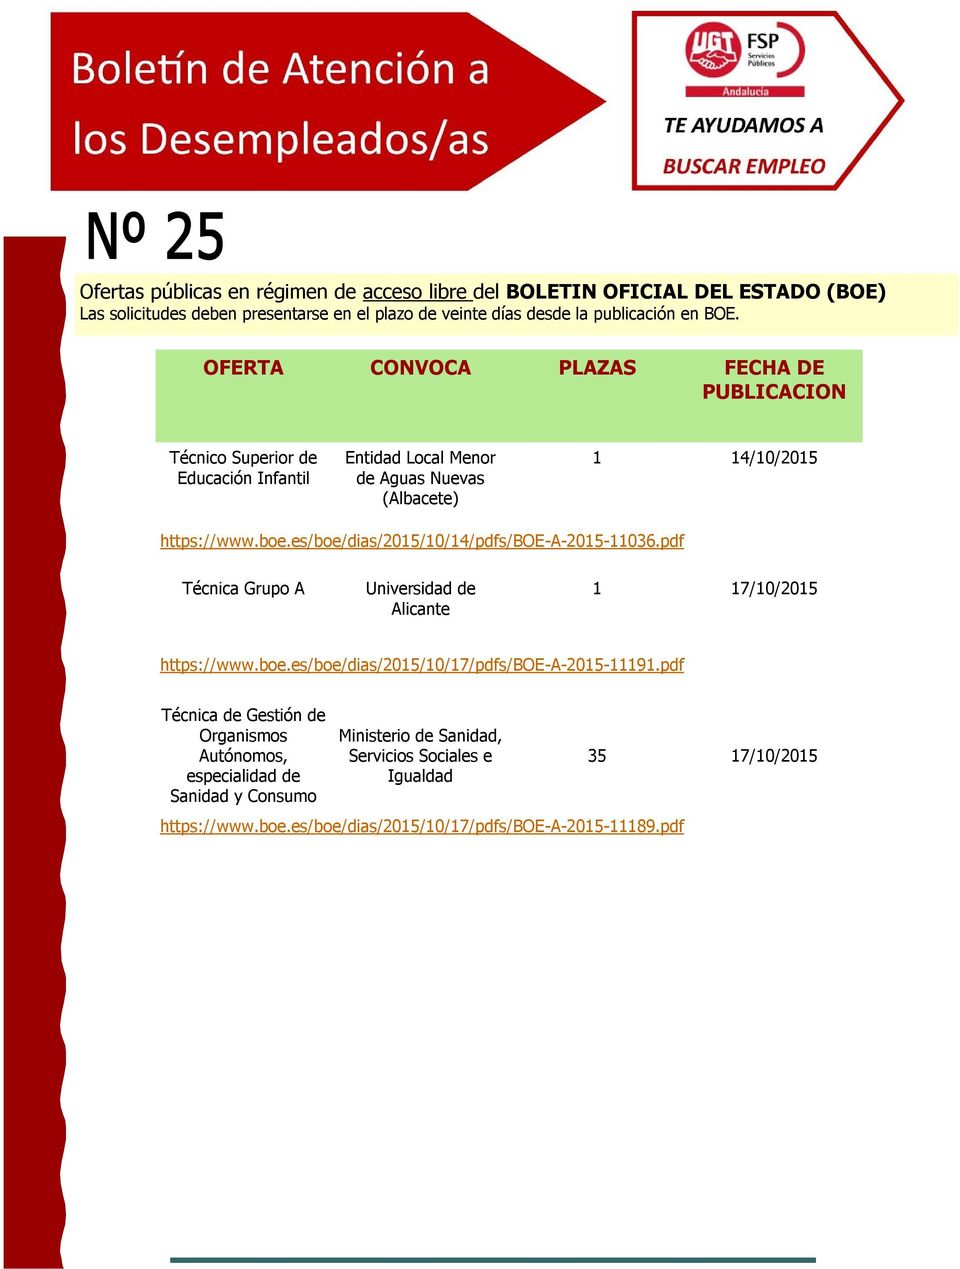 pdf Técnica Grupo A Universidad de Alicante 1 17/10/2015 https://www.boe.es/boe/dias/2015/10/17/pdfs/boe-a-2015-11191.